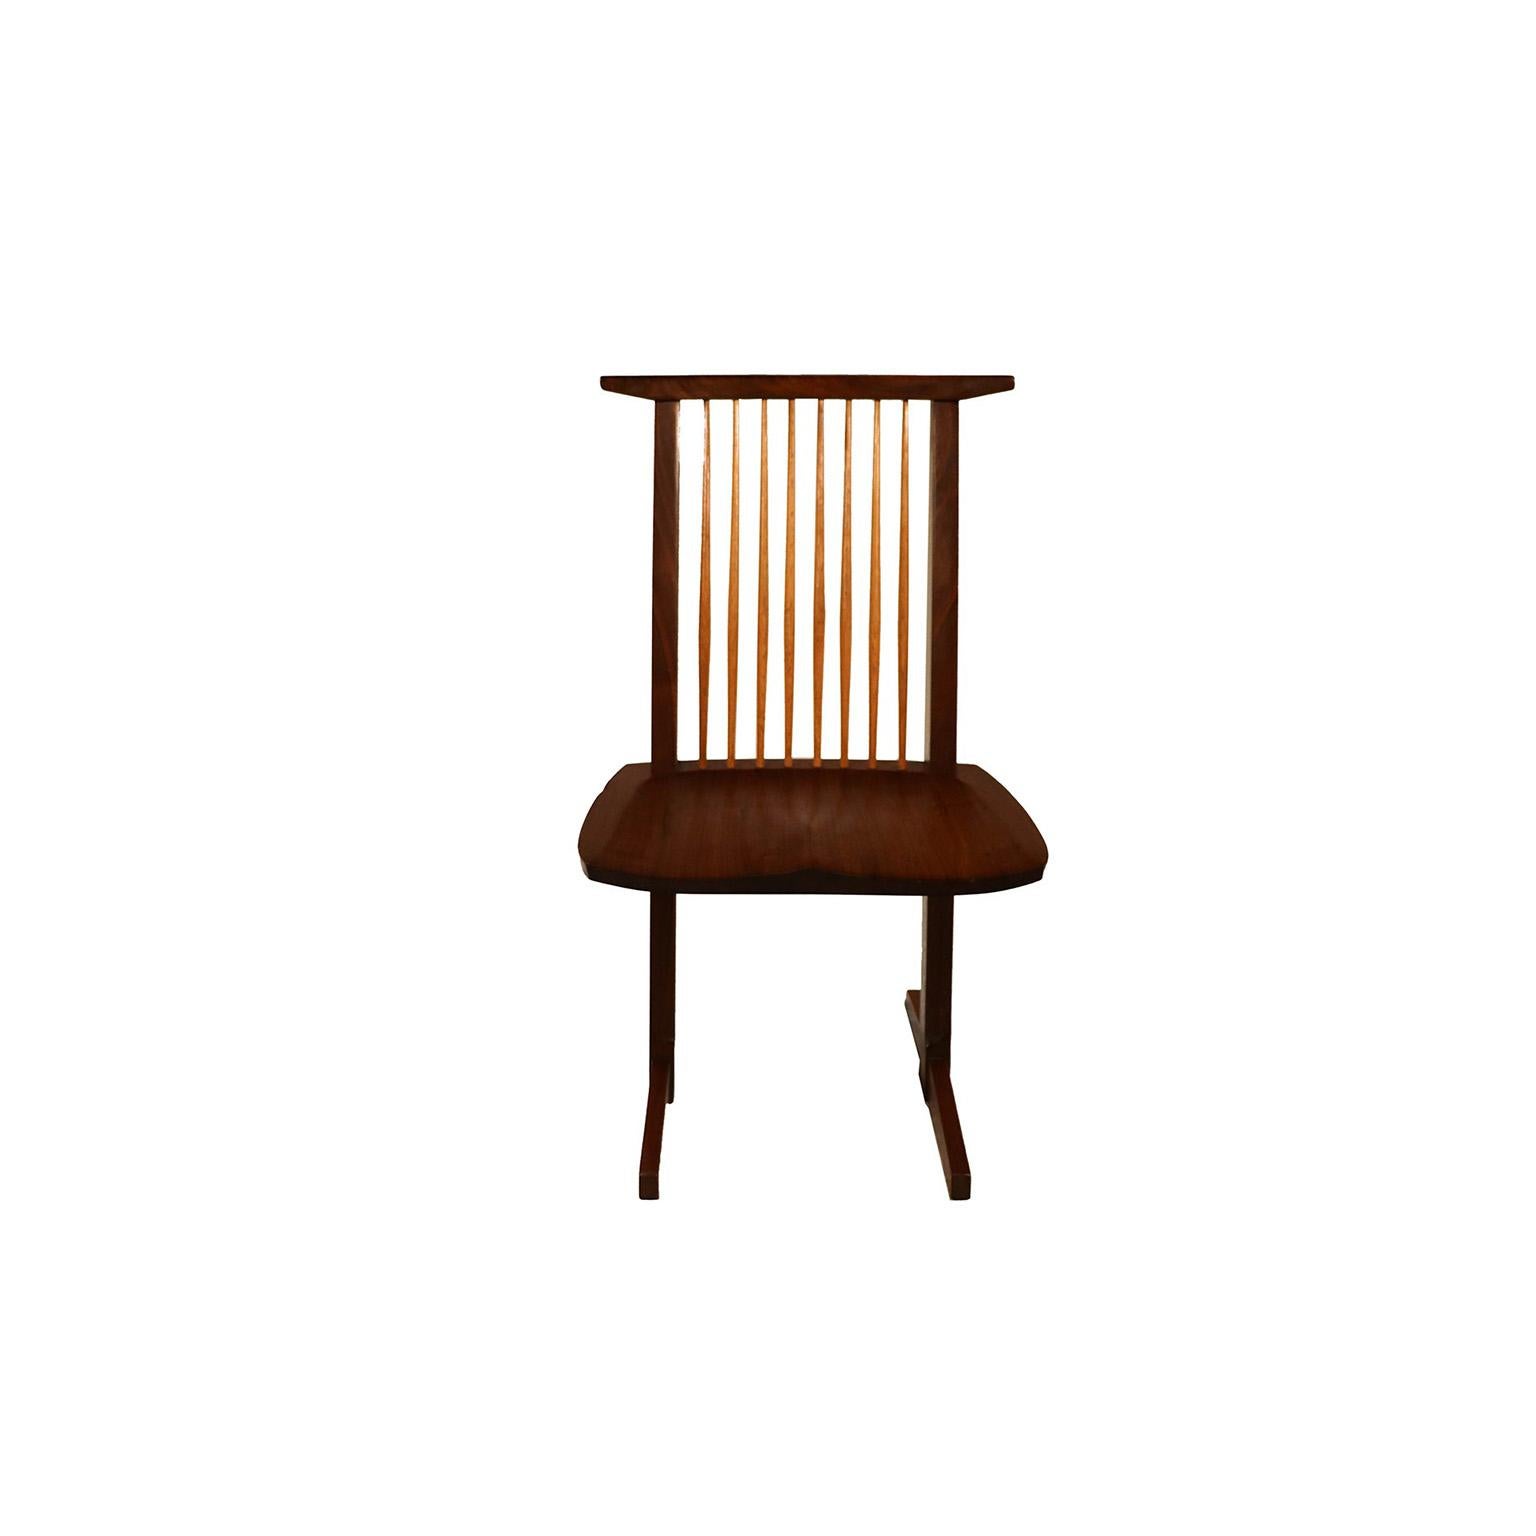 American George Nakashima Conoid Chairs